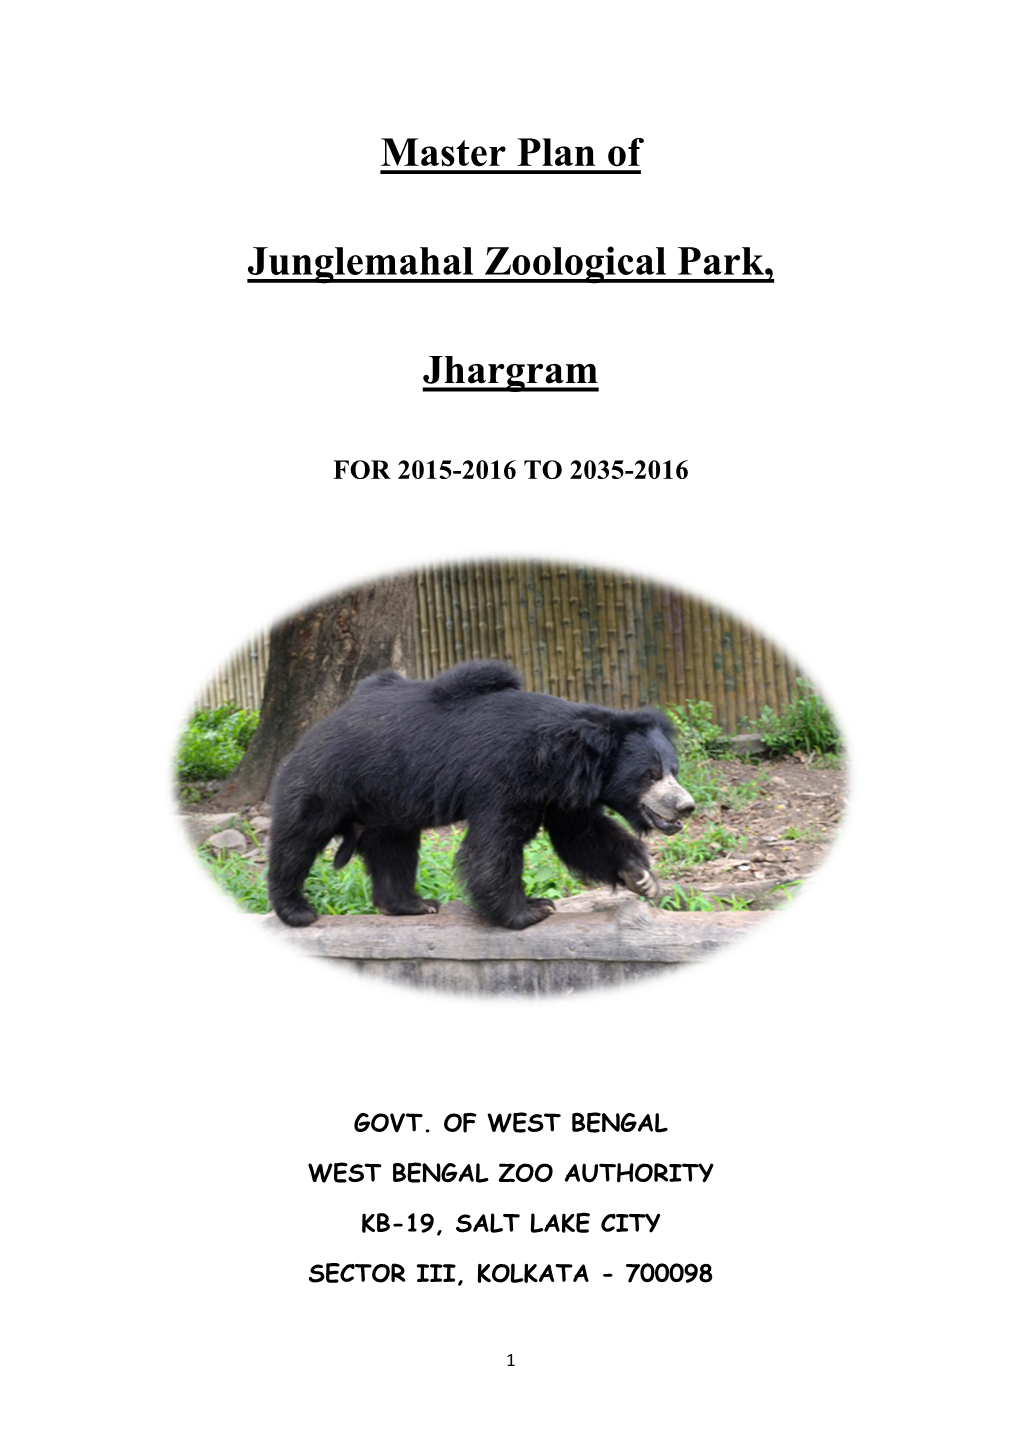 Master Plan of Junglemahal Zoological Park, Jhargram